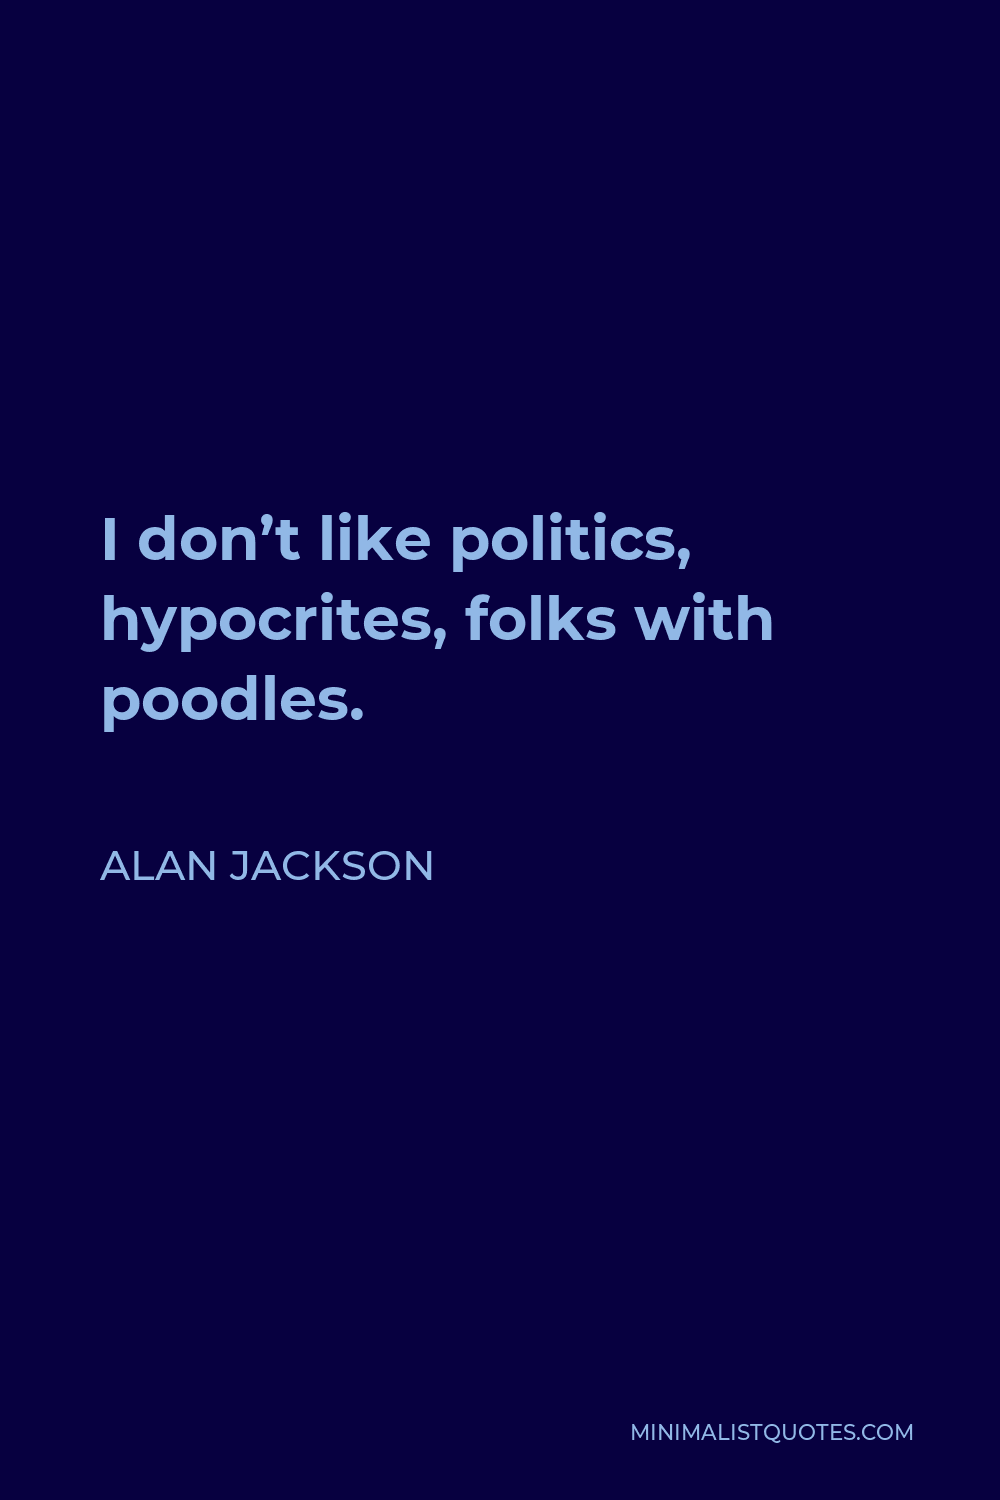 Alan Jackson Quote - I don’t like politics, hypocrites, folks with poodles.